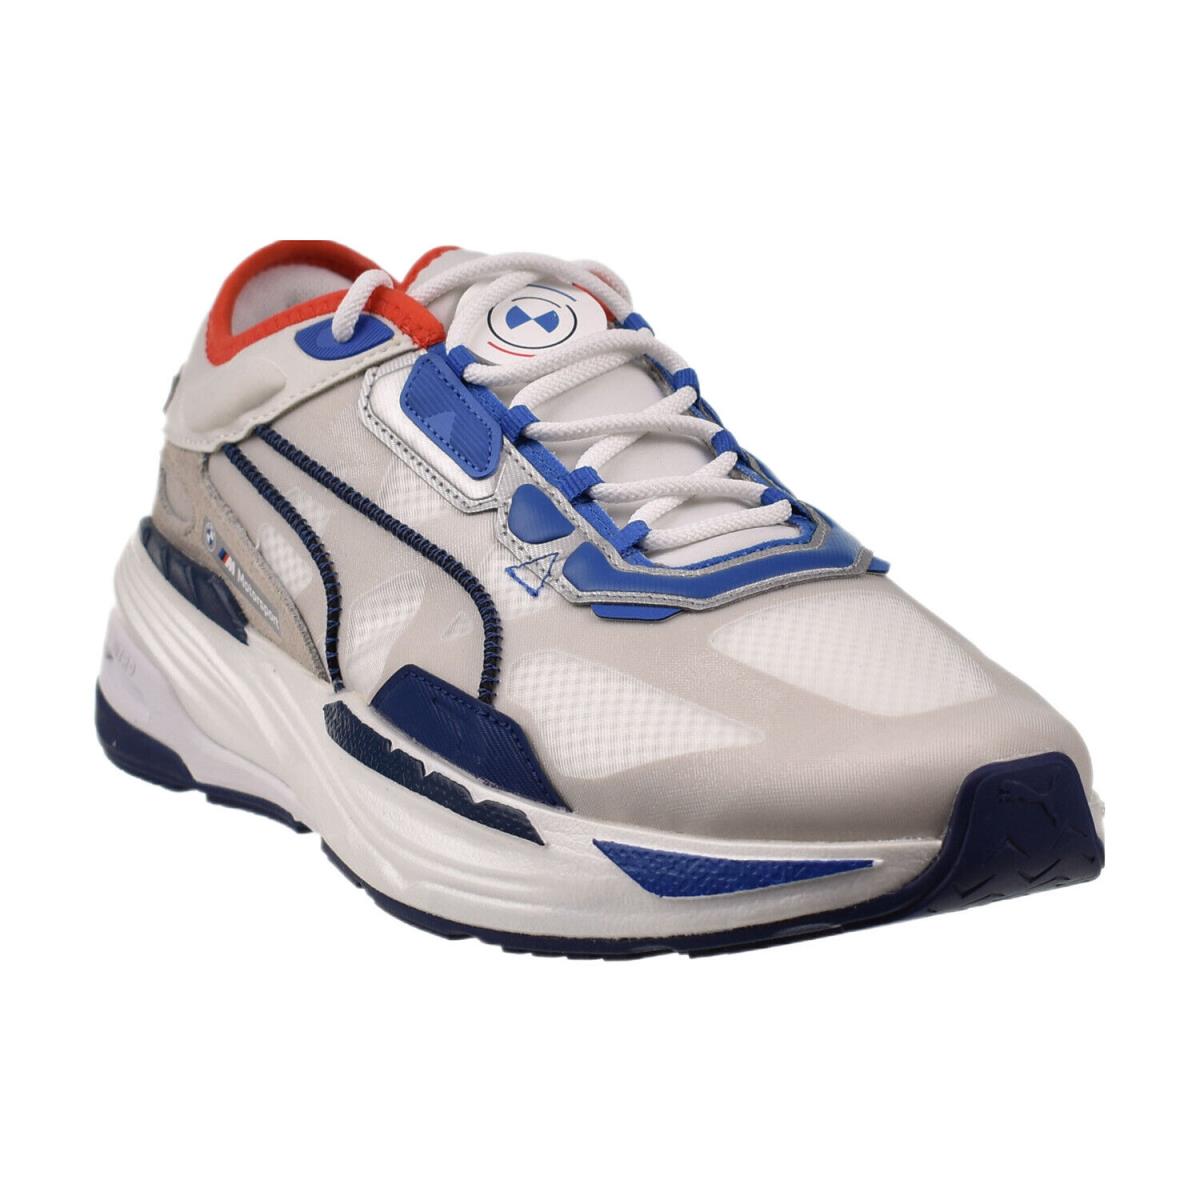 Puma Bmw Extent Nitro Assembly Men`s Shoes White-blue 307410-01 - White-Blue